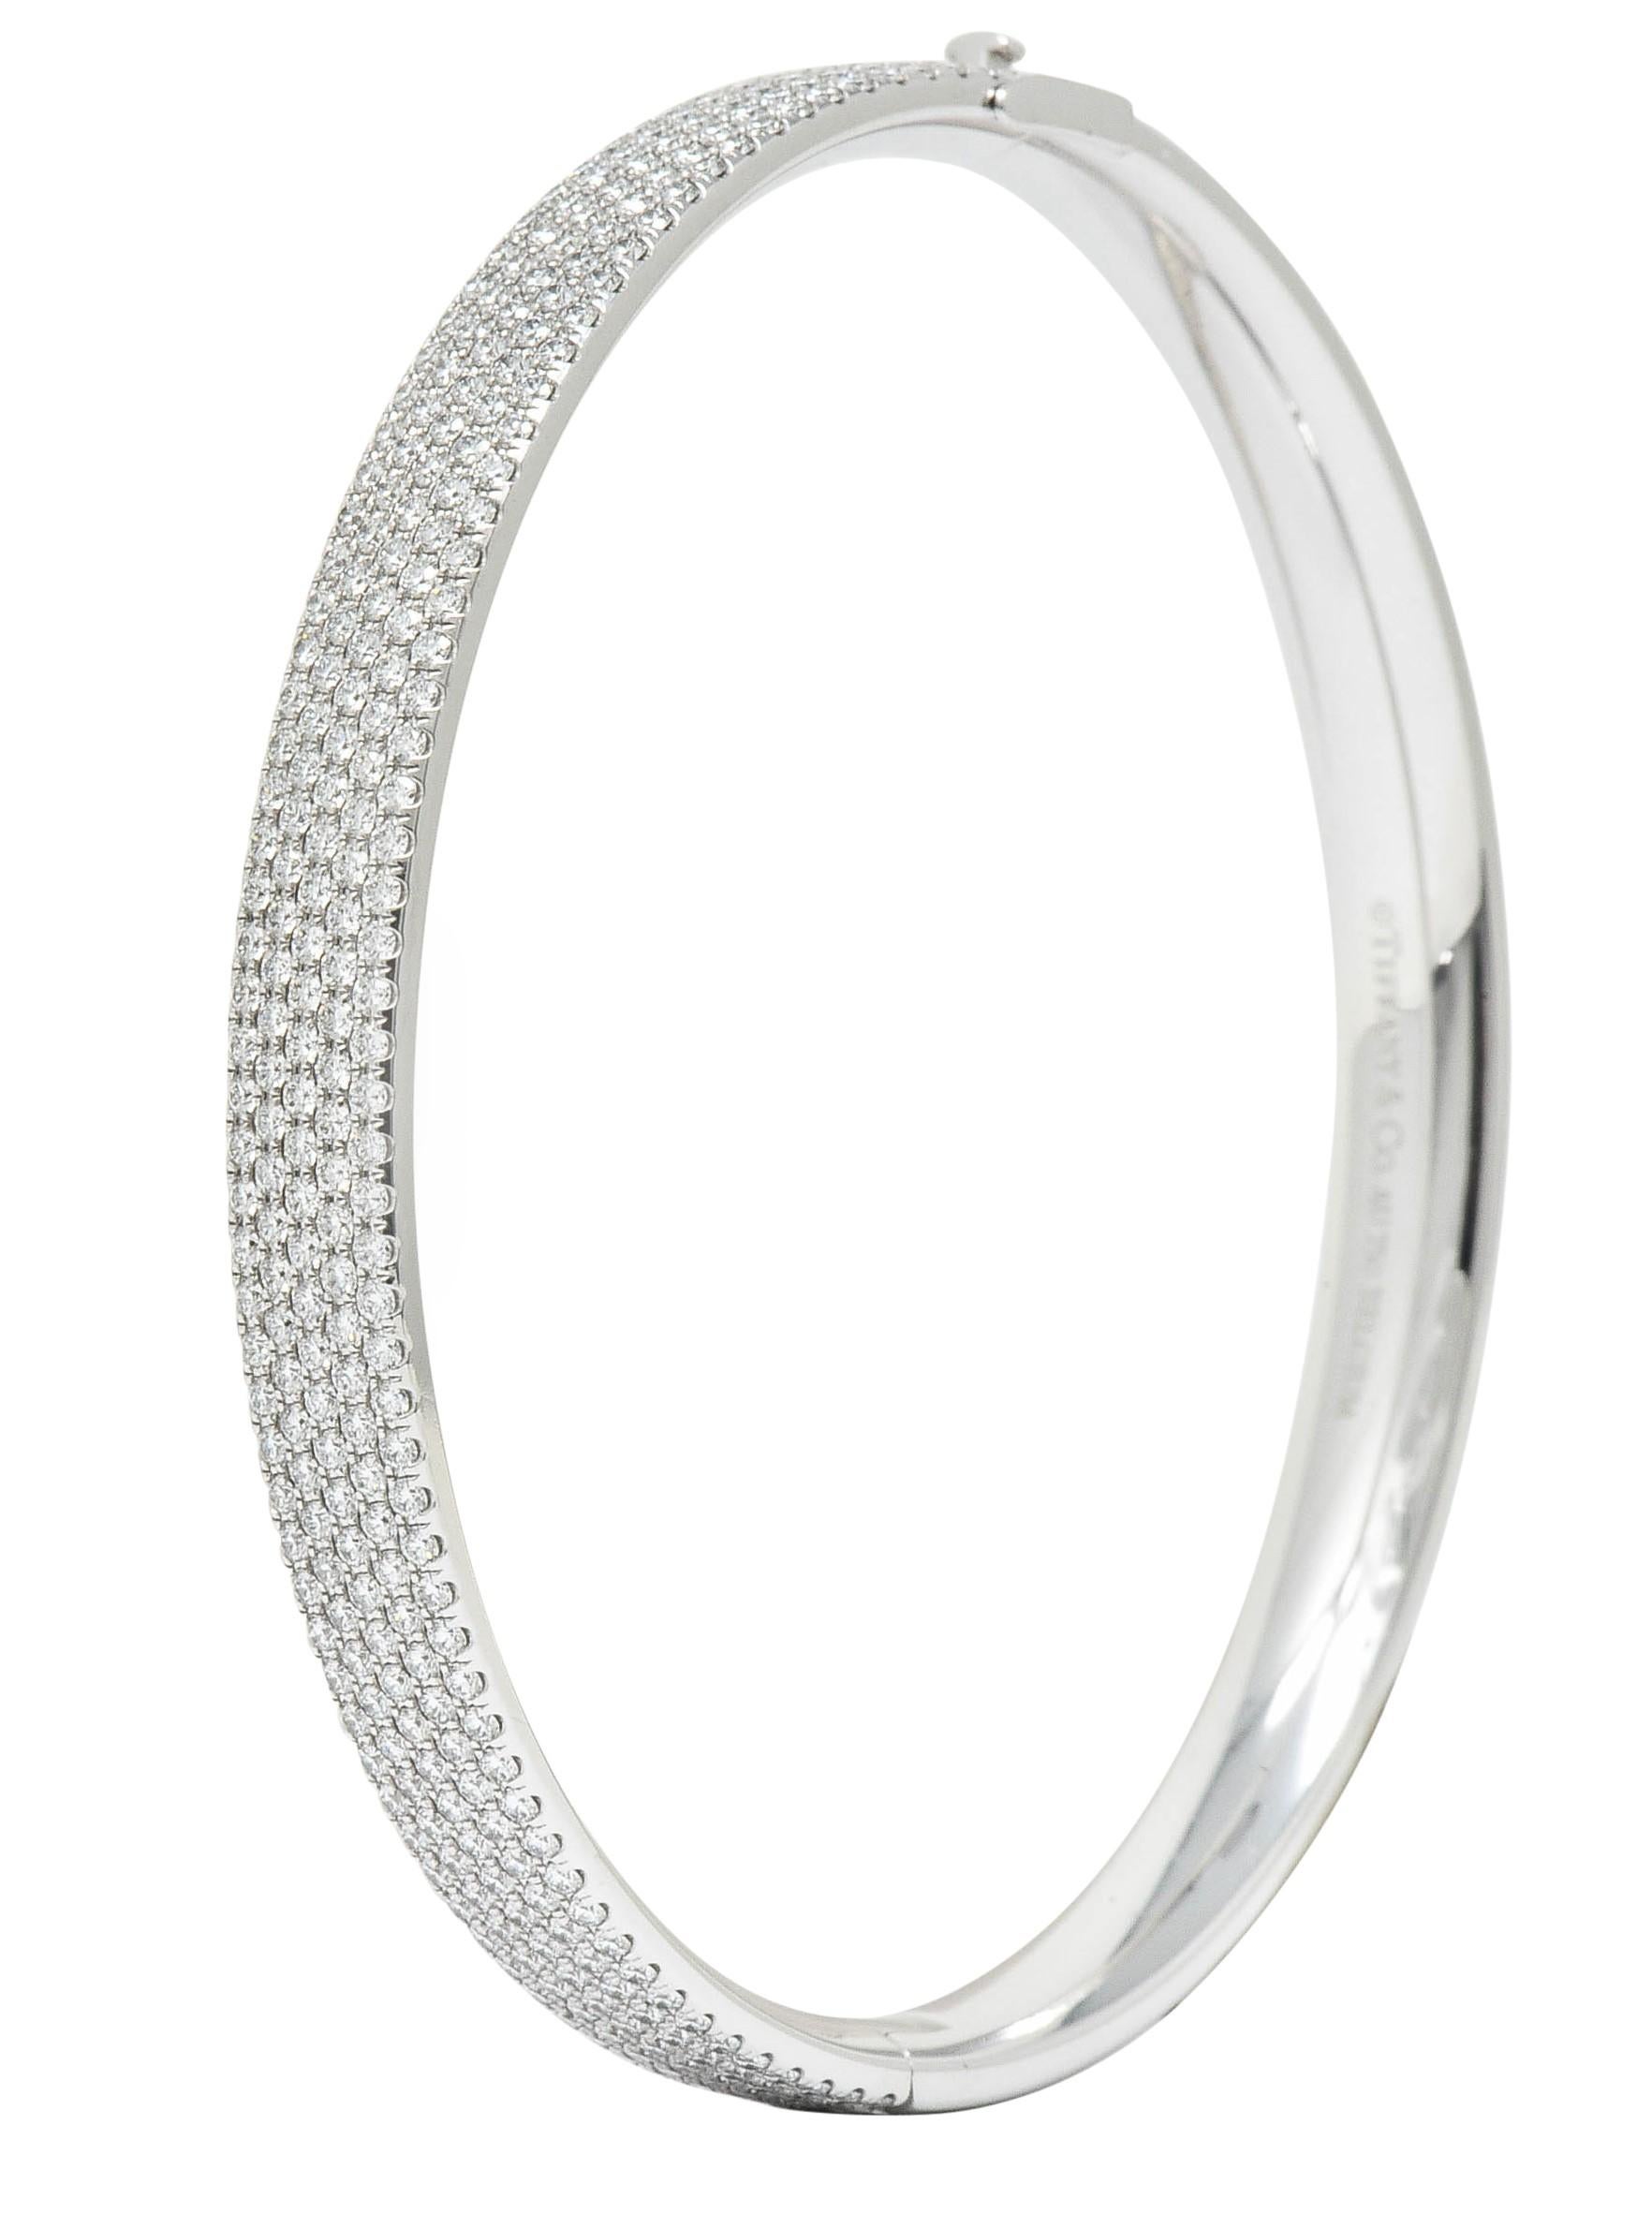 Tiffany & Co. 4.96 Carat Pave Diamond 18 Karat White Gold Metro Bangle Bracelet 1